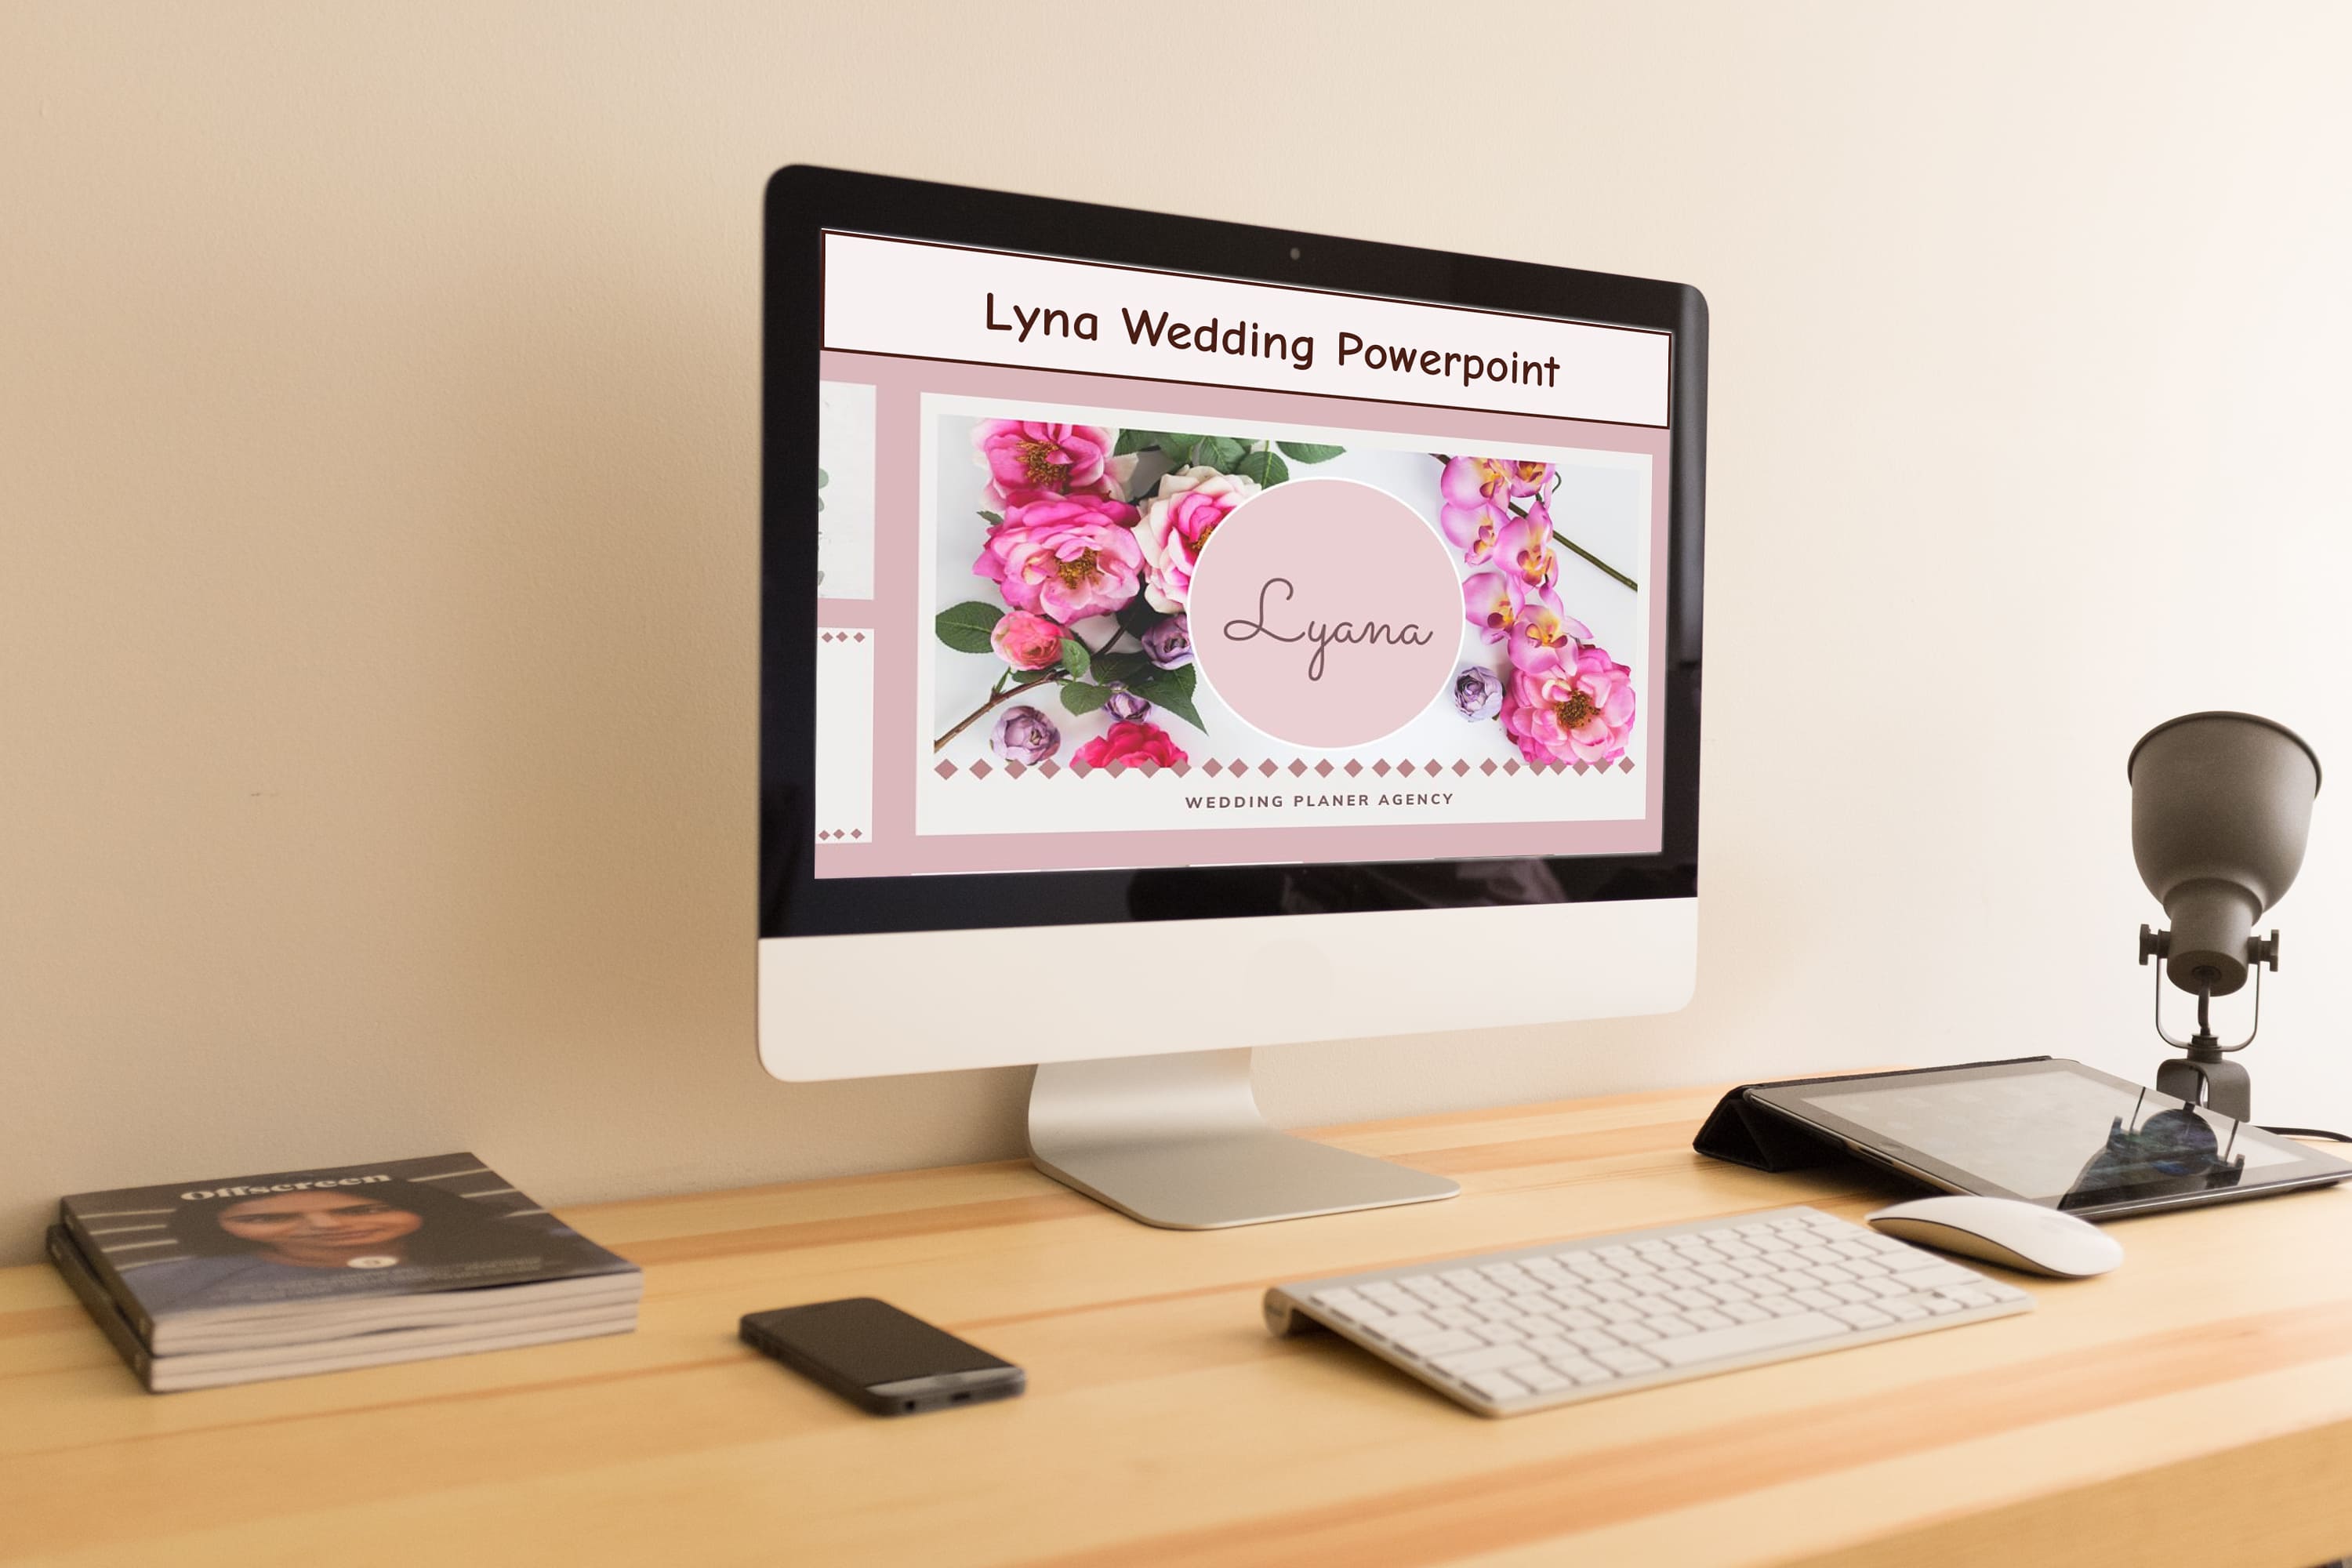 Lyna Wedding Powerpoint - desktop.